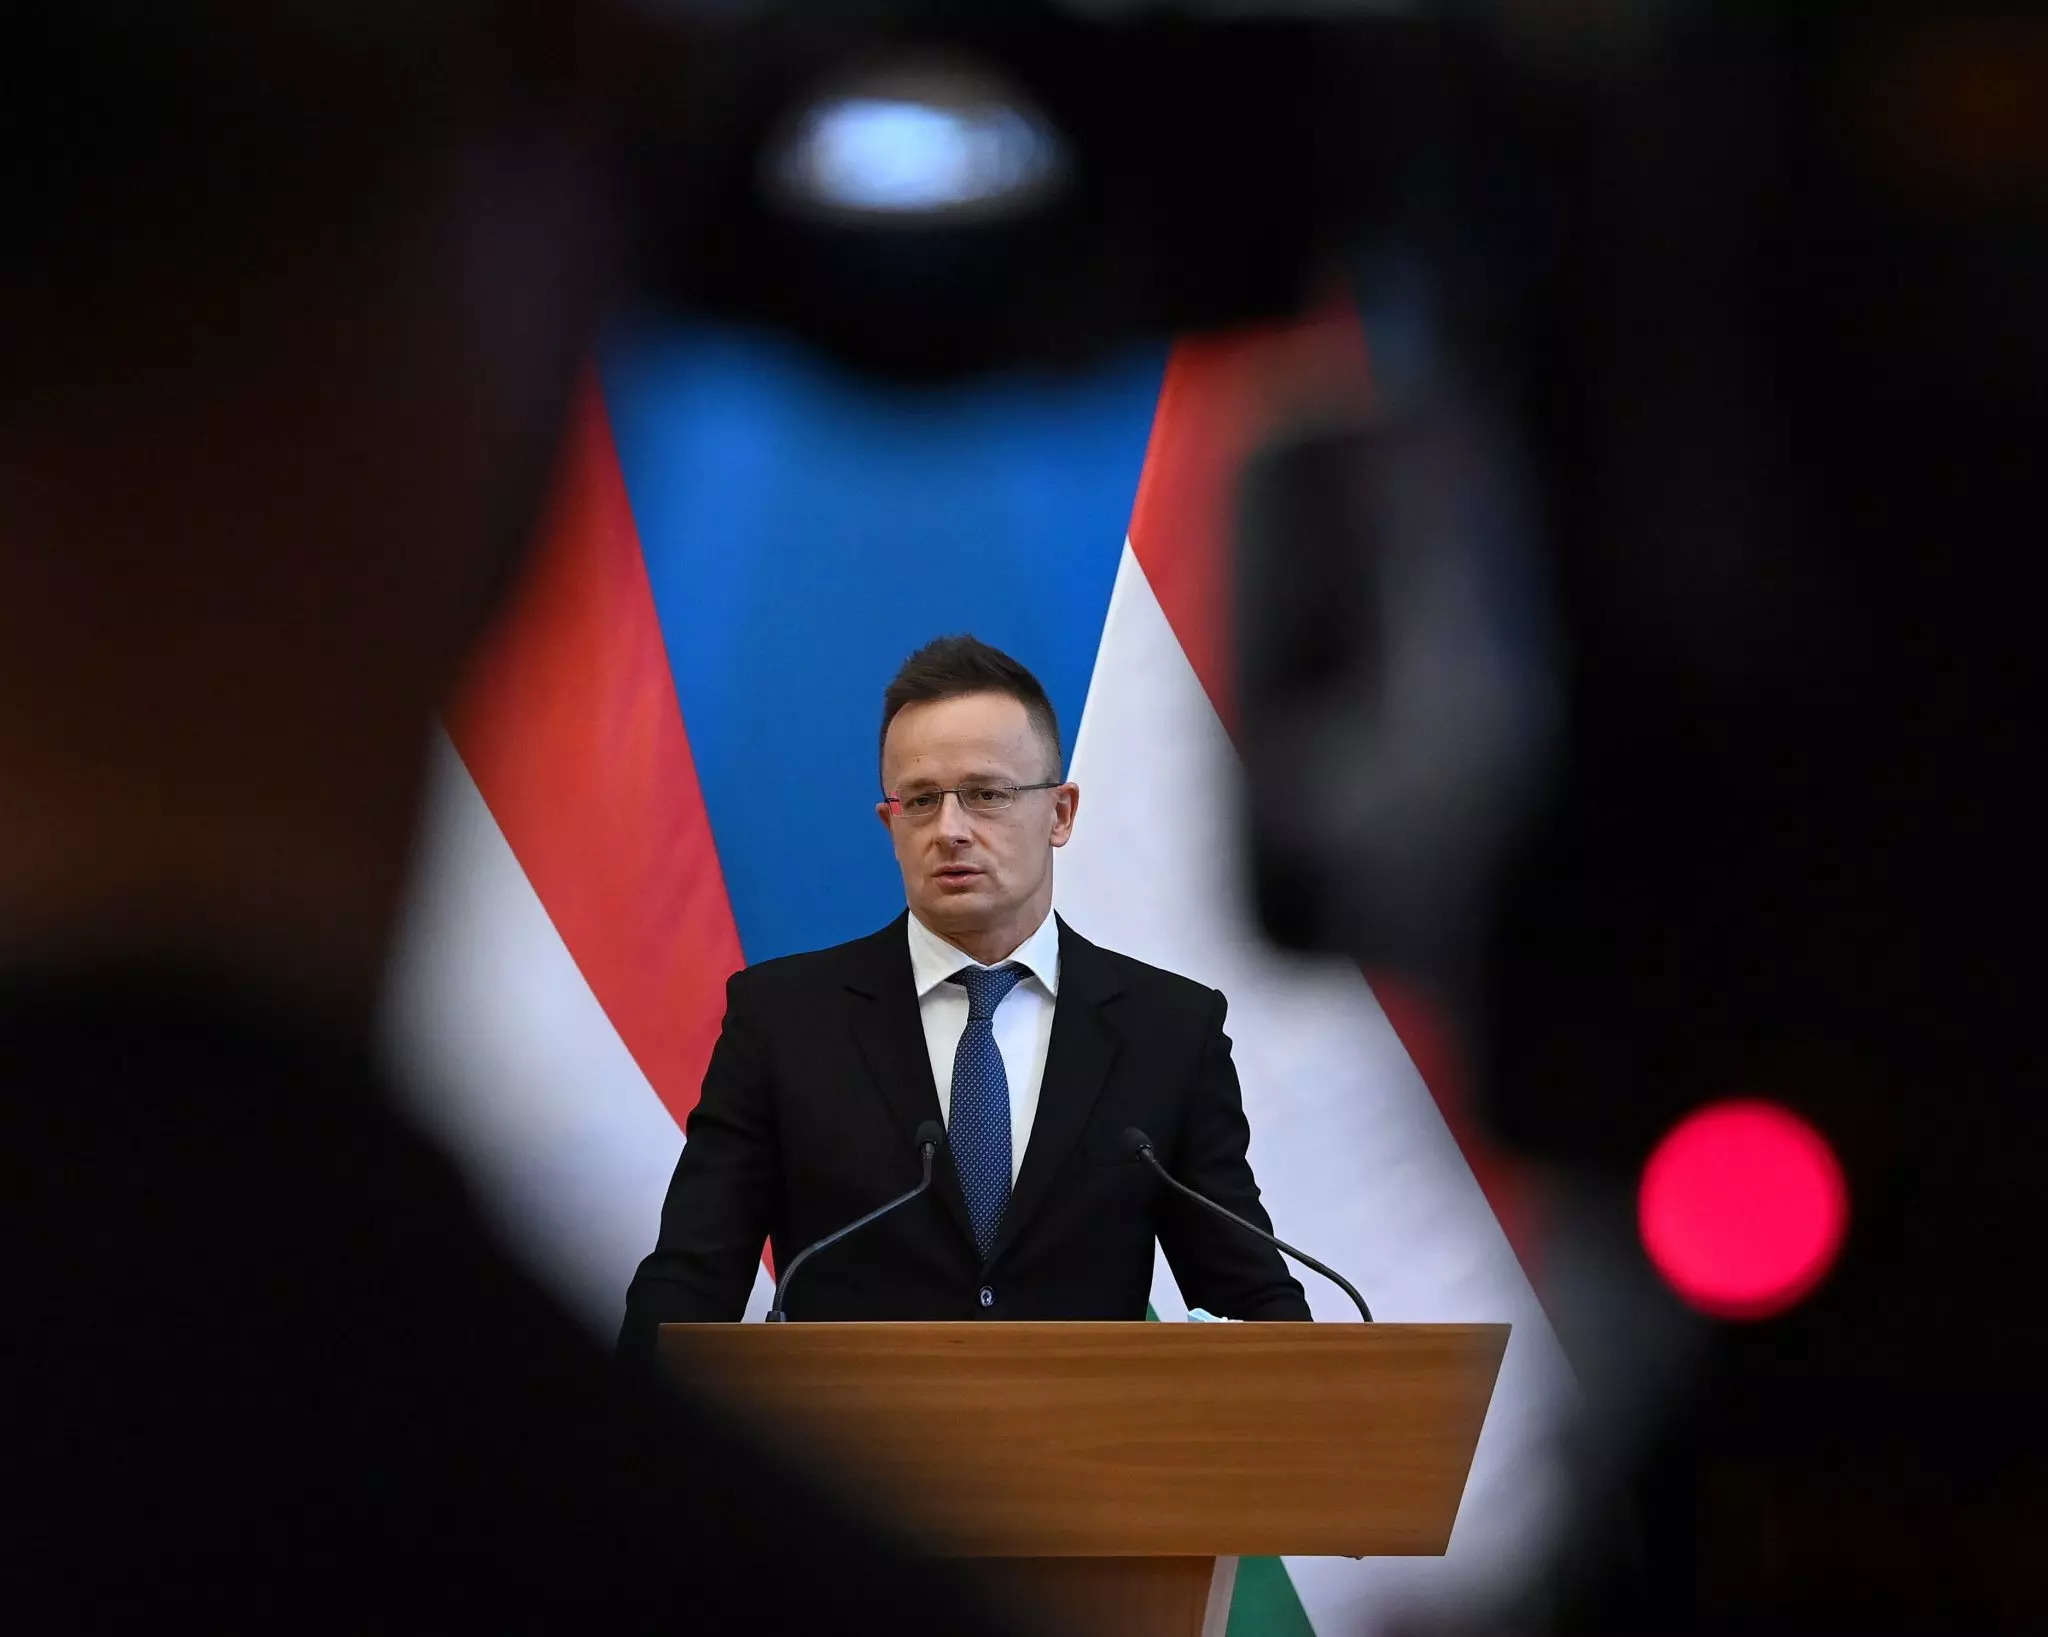 Hungary Foreign Minister Peter Szijjarto